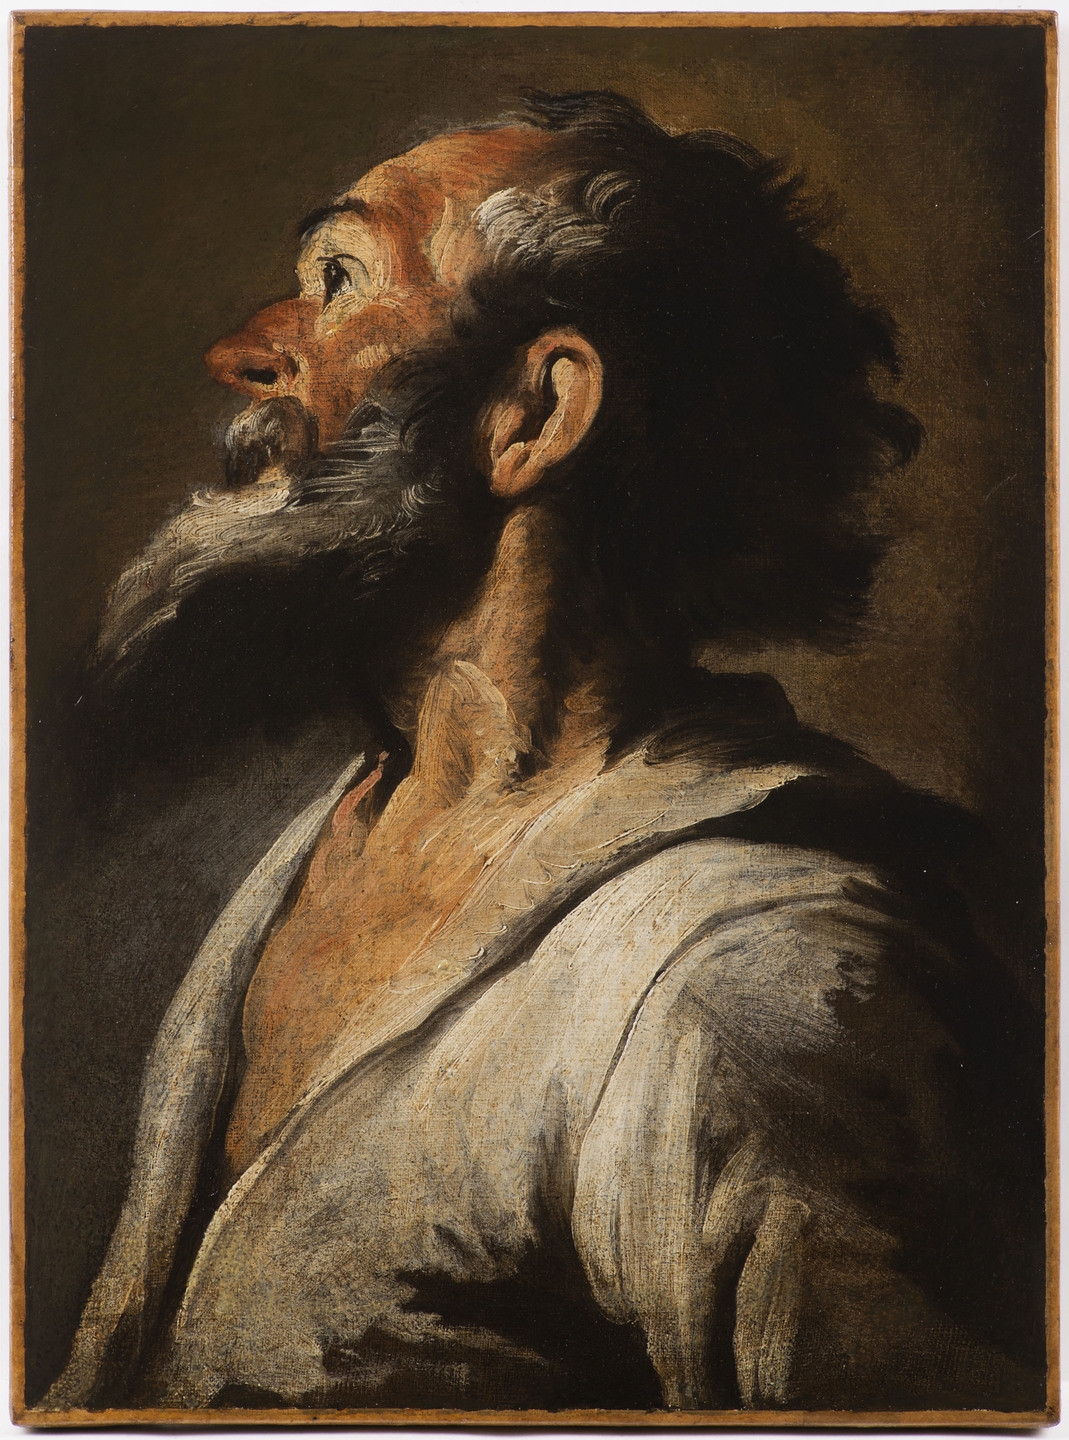 Study of the Head of a Bearded Man by Bernardo Strozzi